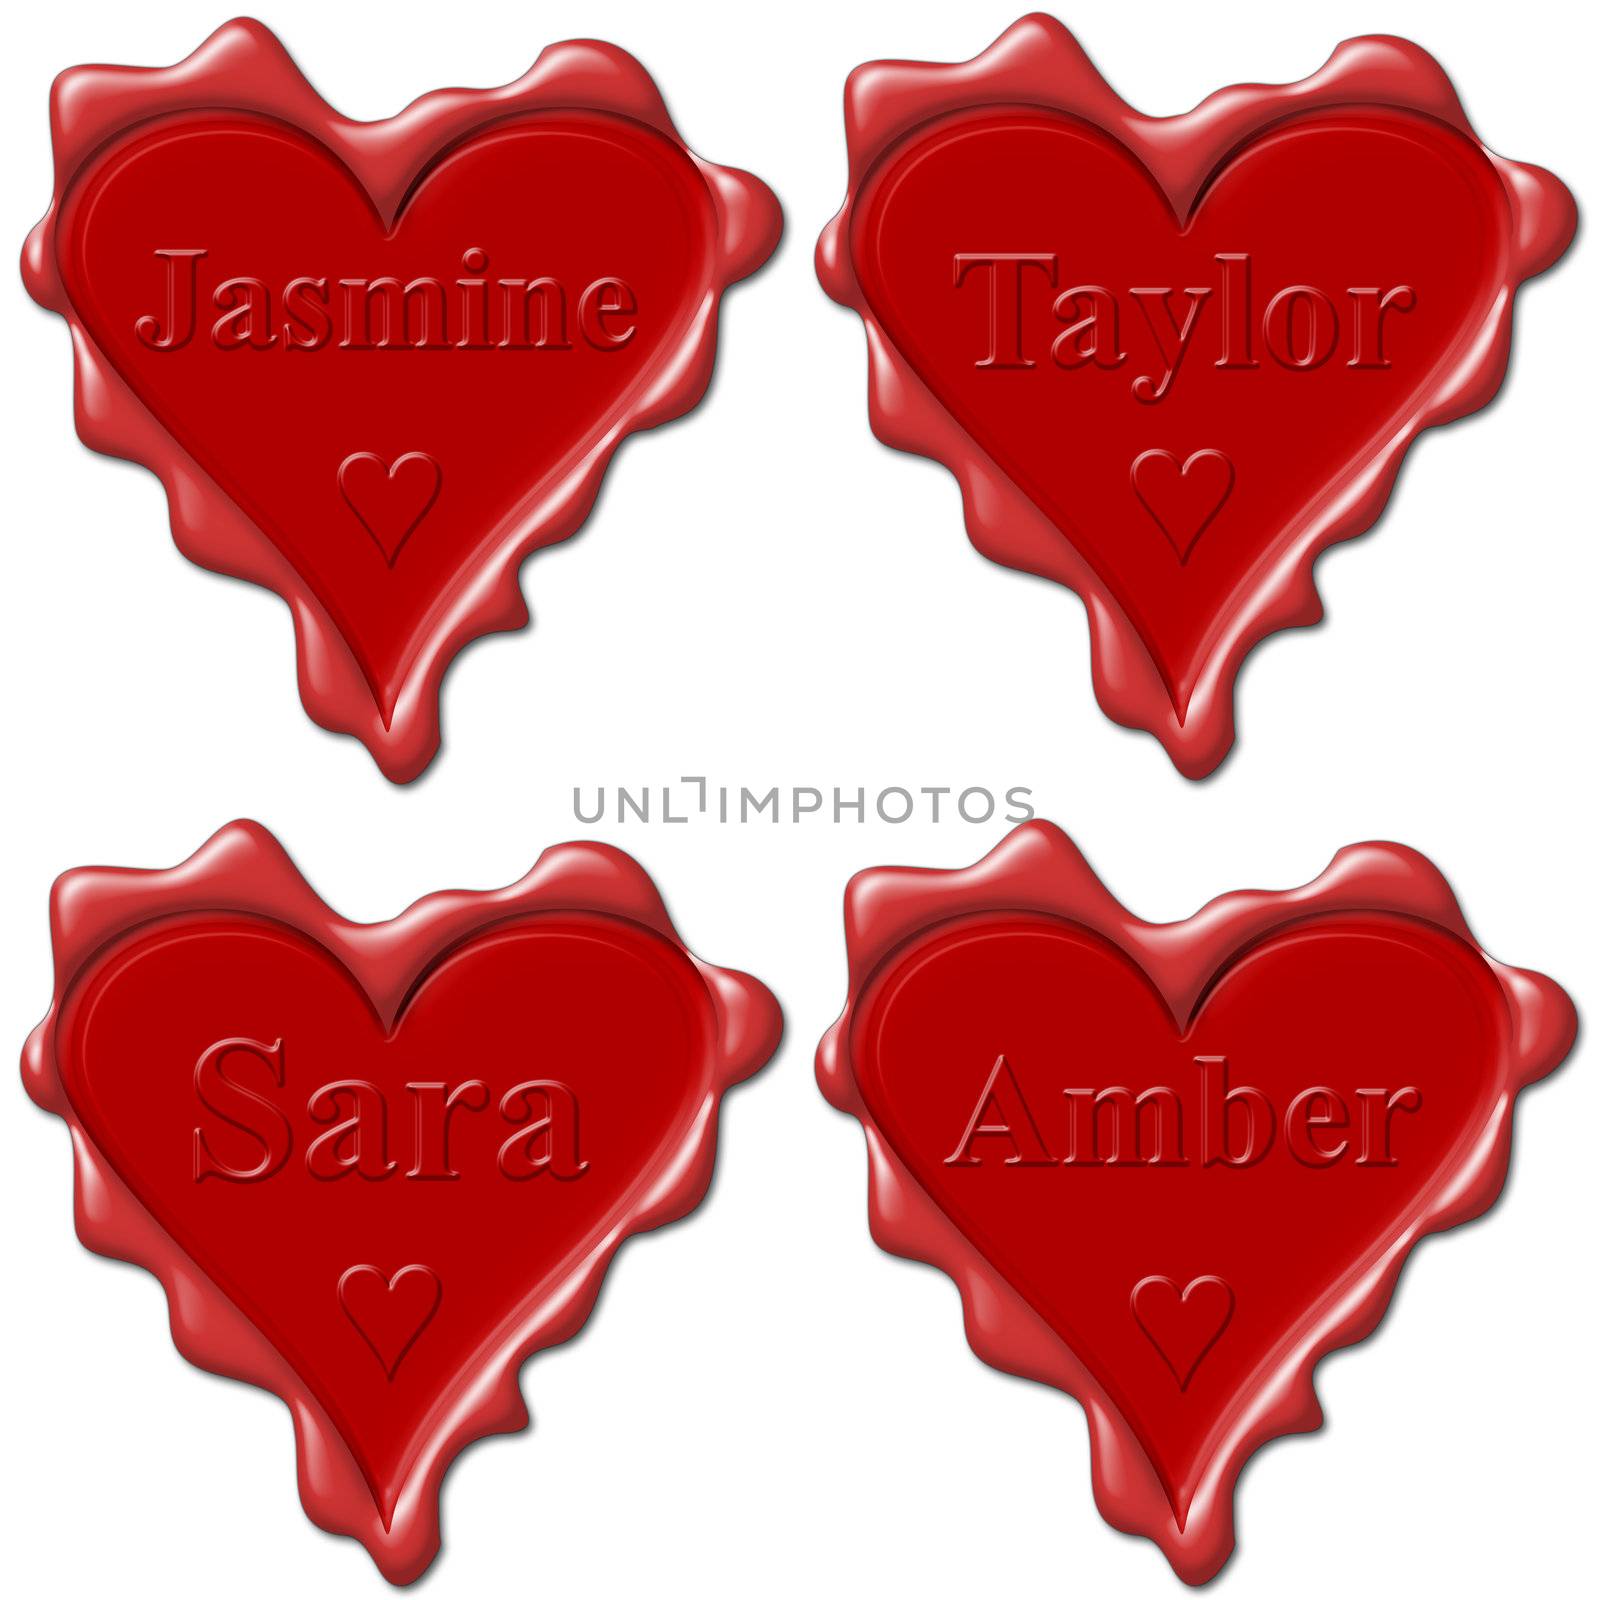 Valentine love hearts with names: Jasmine, Taylor, Sara, Amber by mozzyb